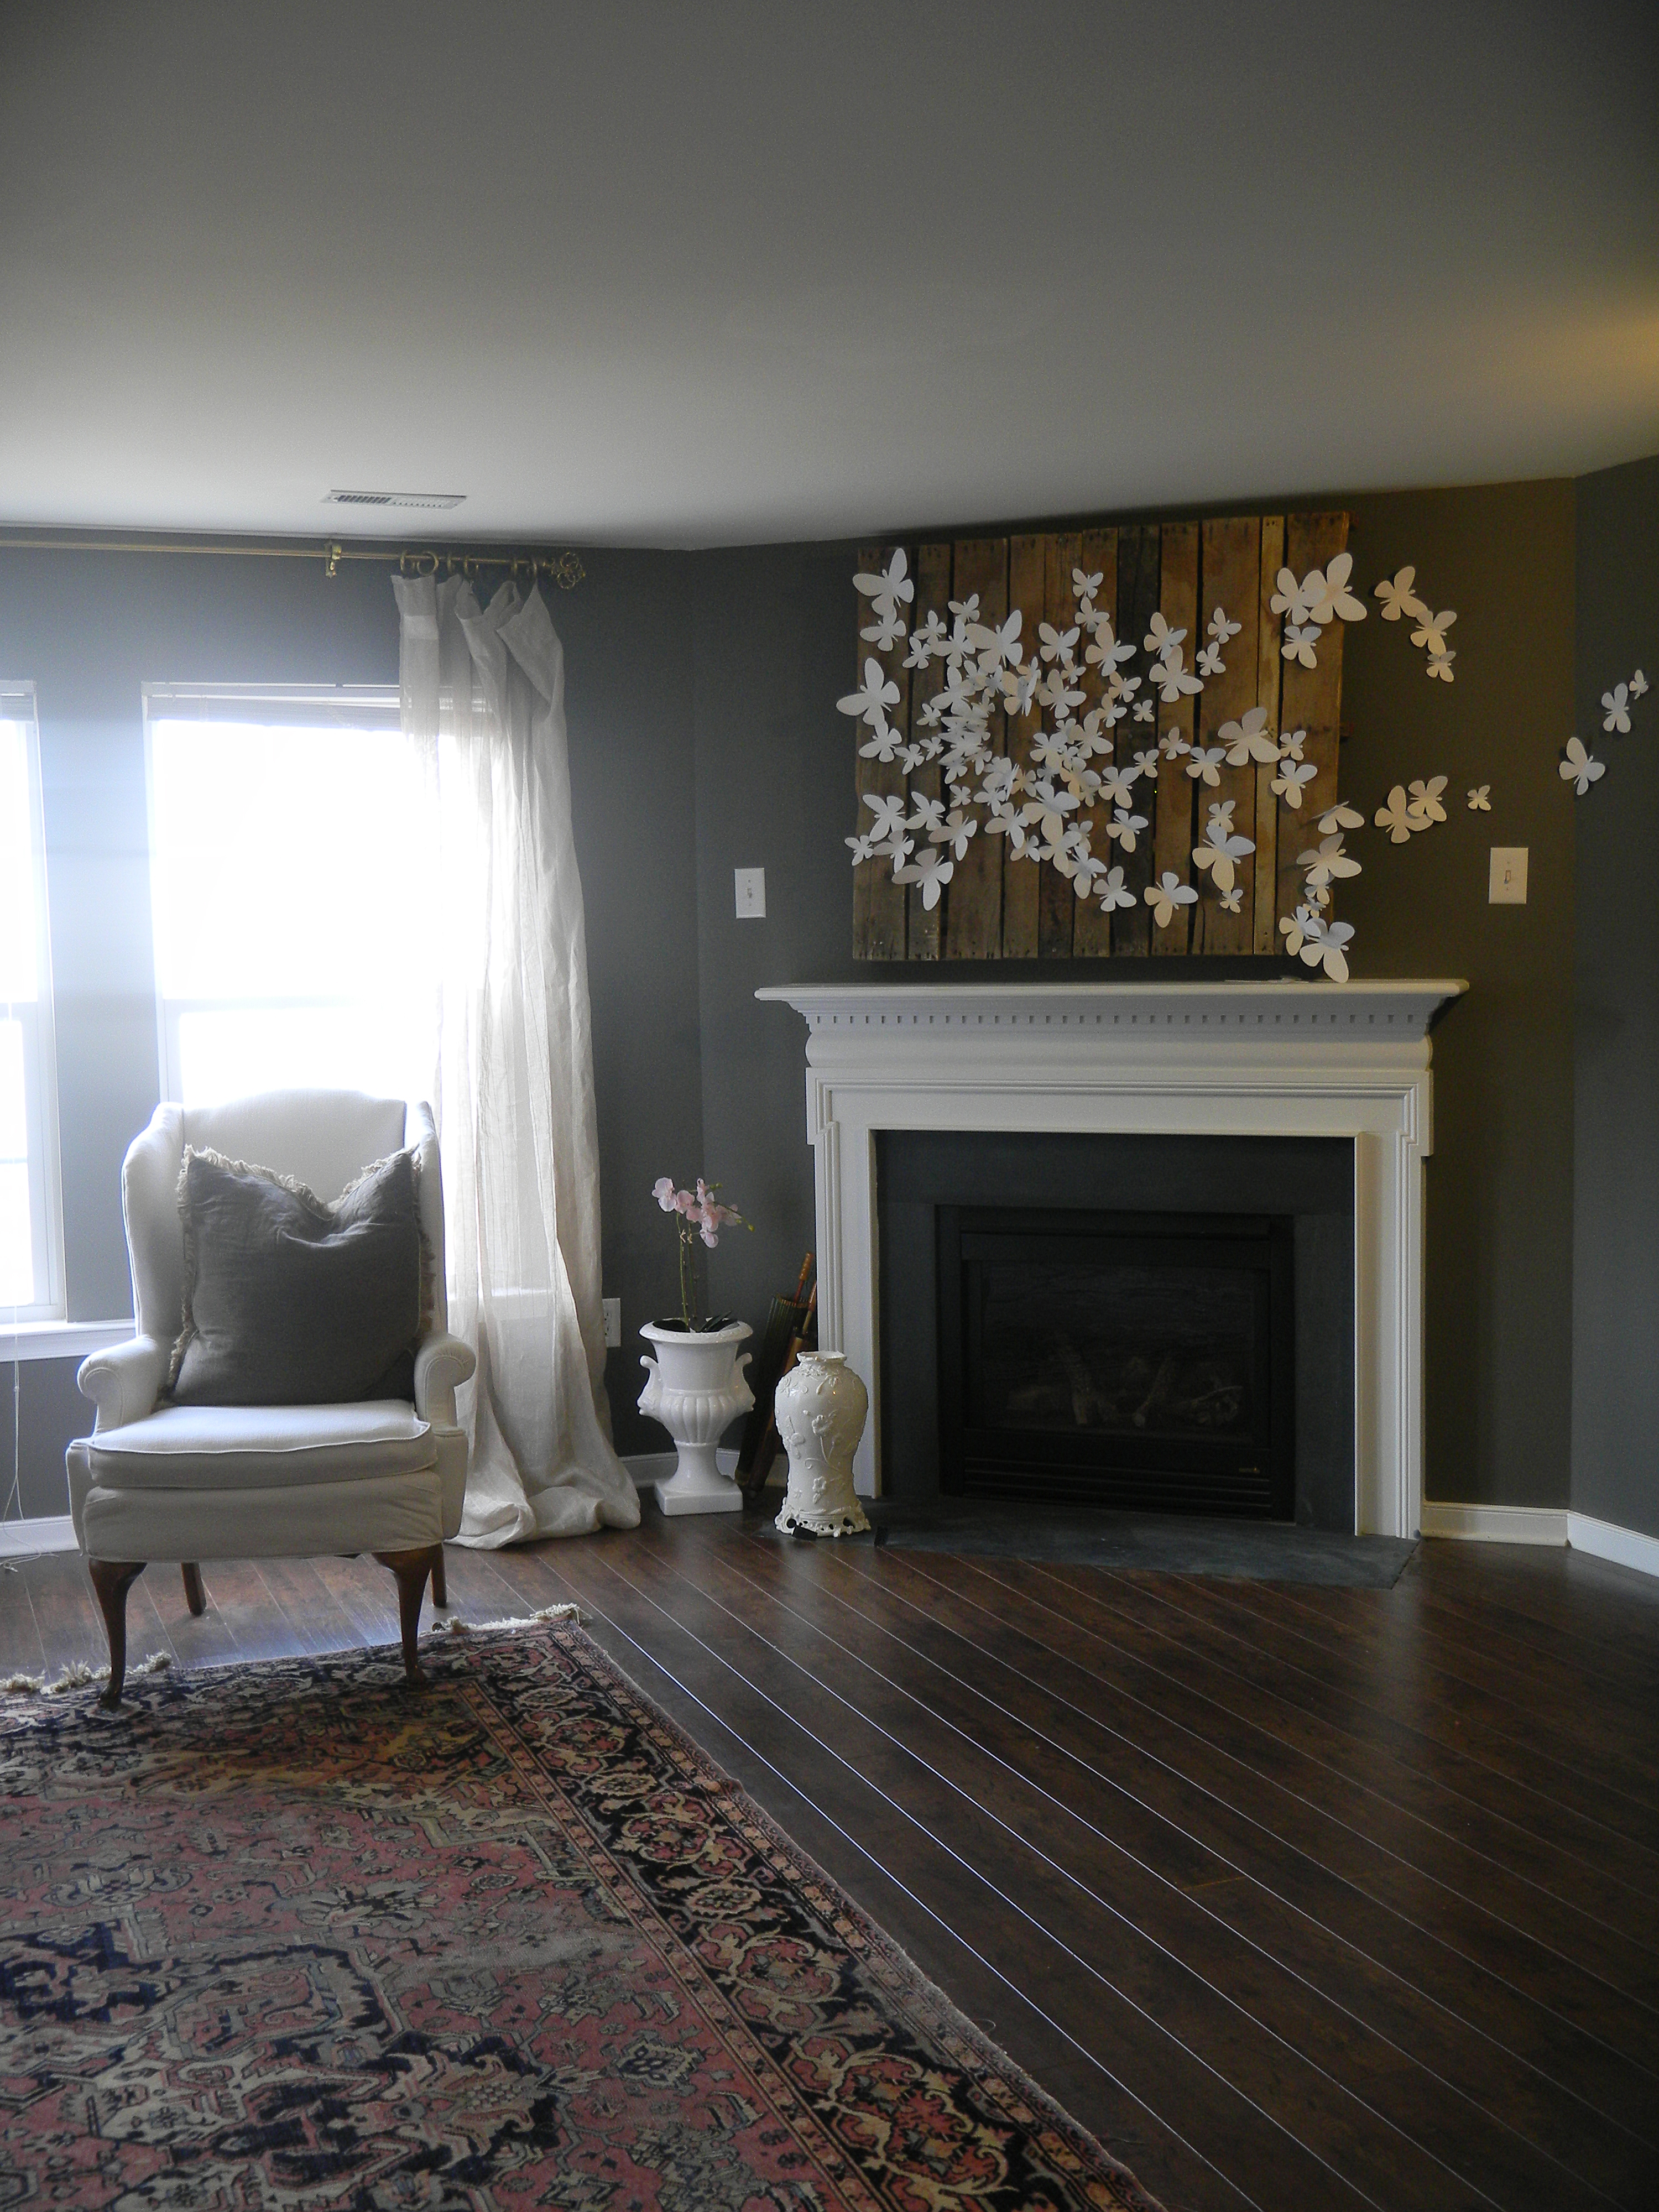 d butterfly wall art design fabulous within fireplace decor